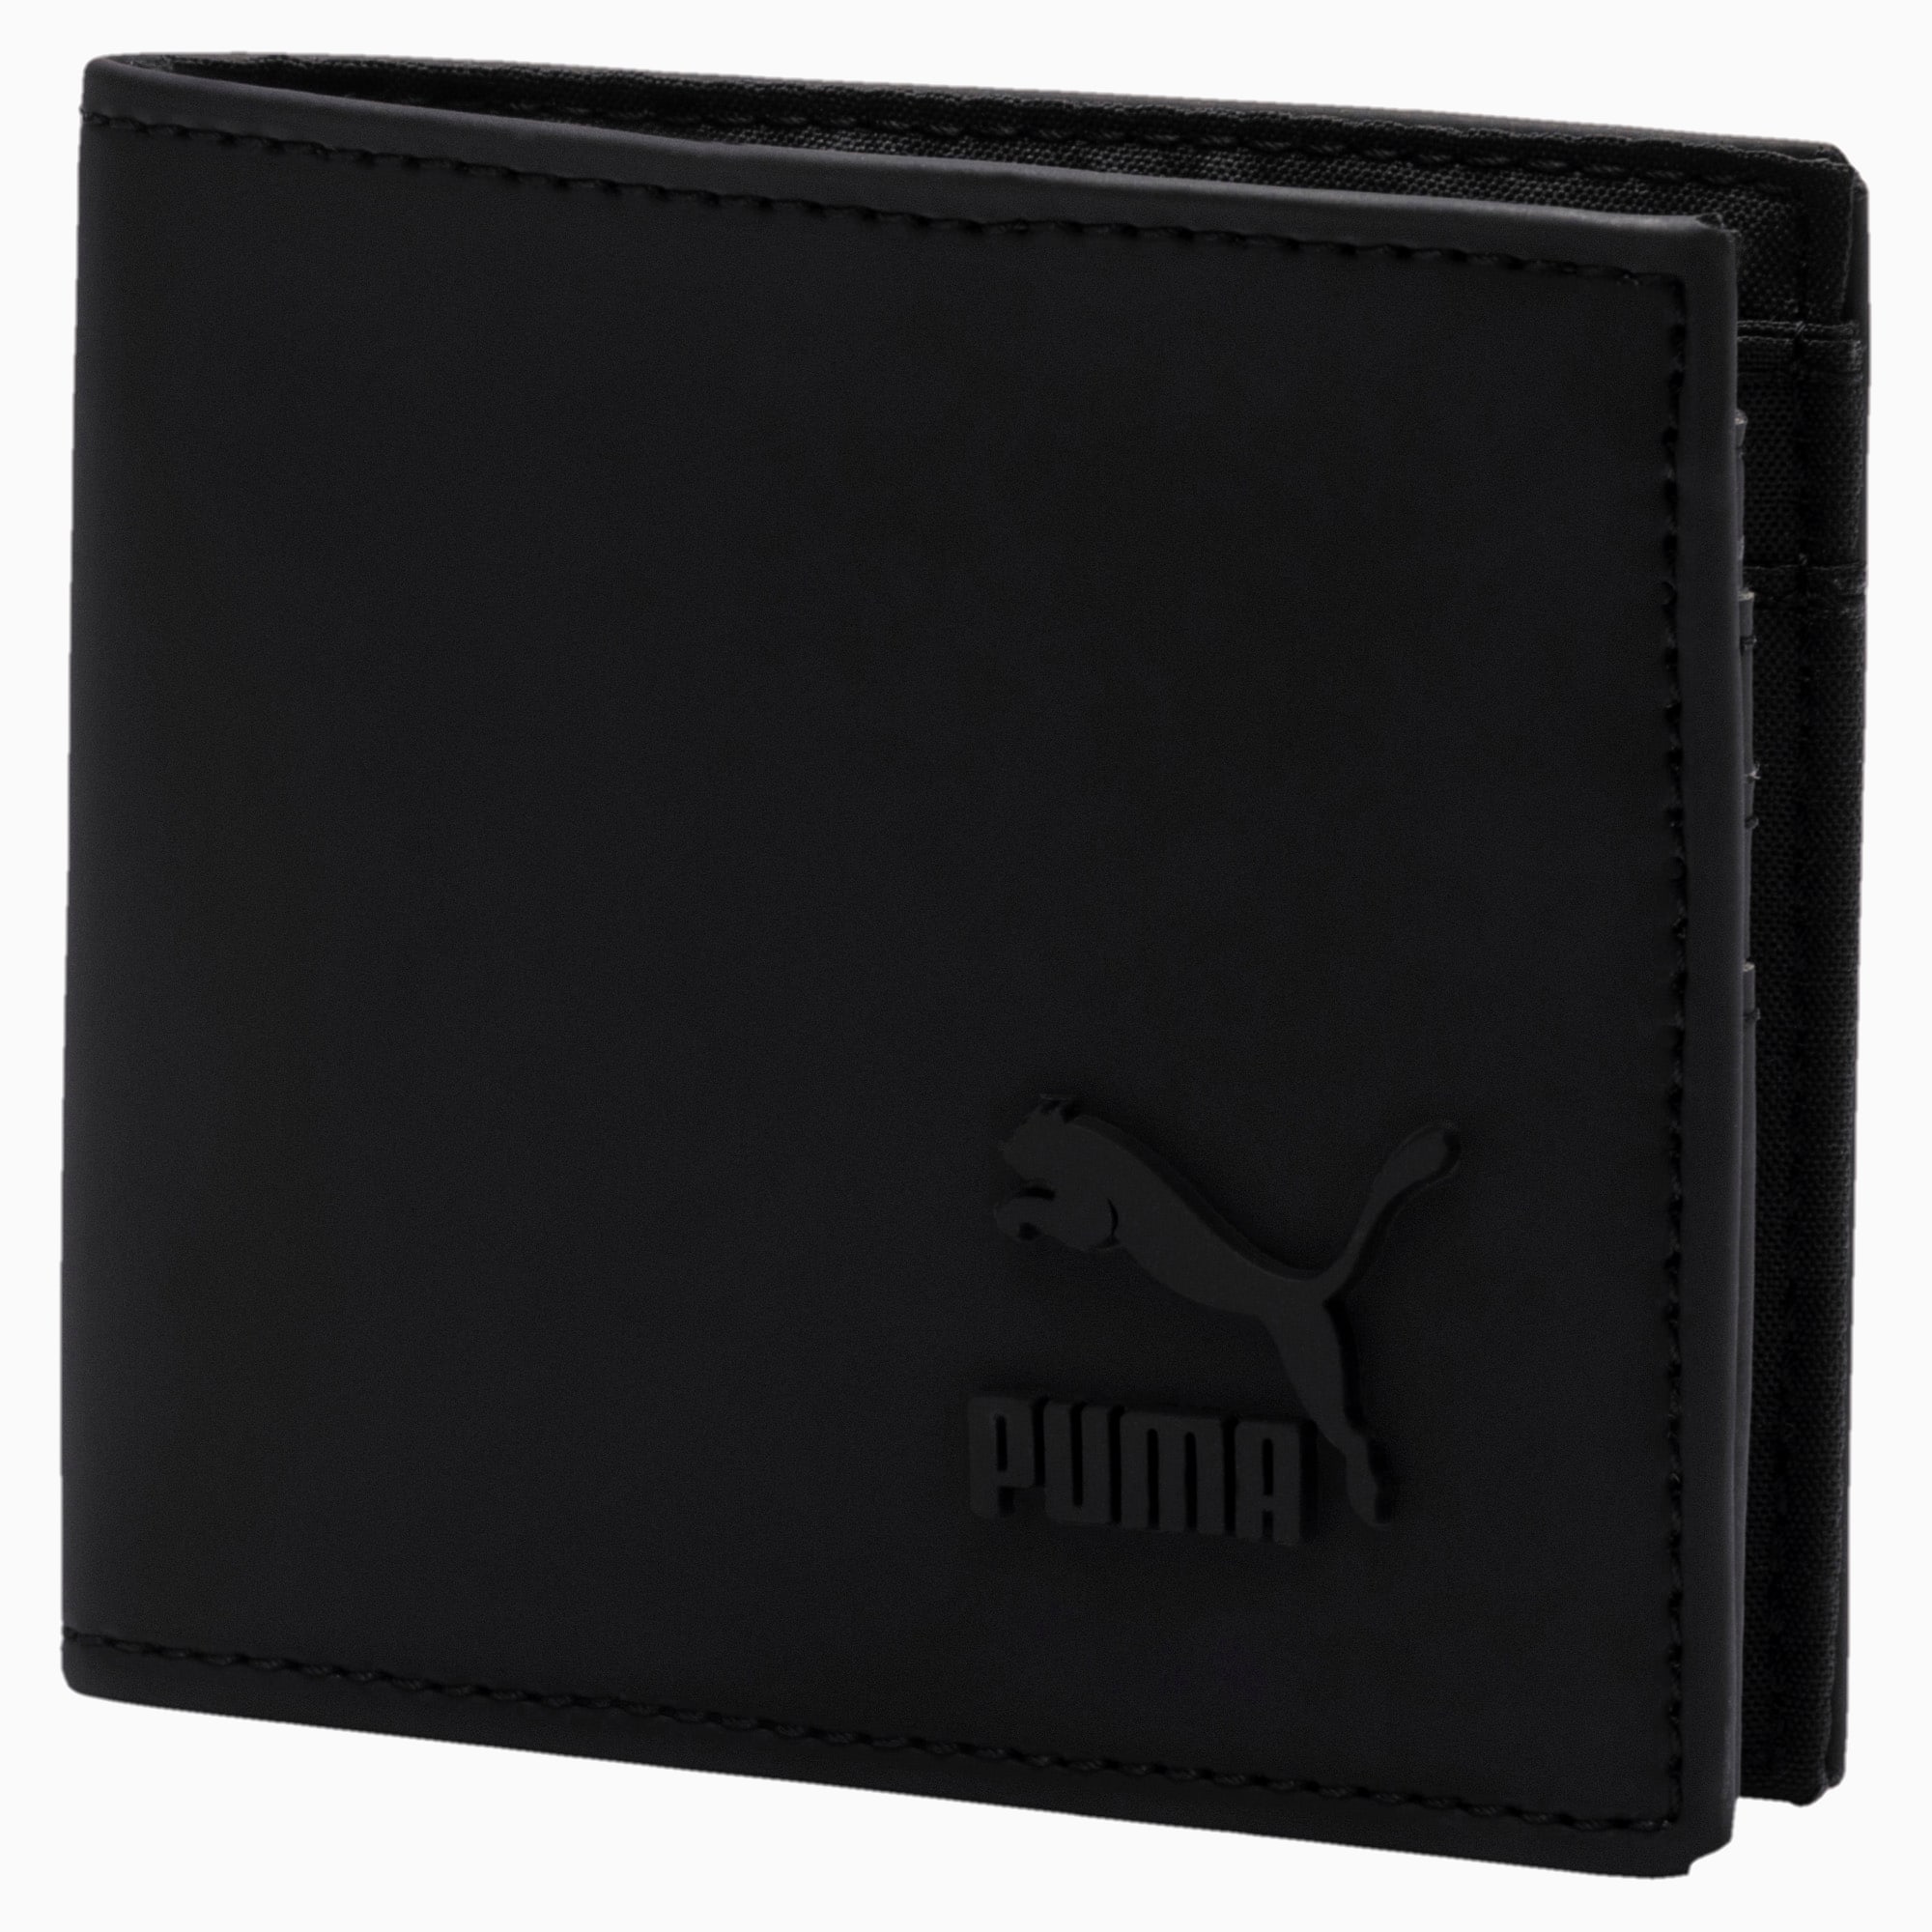 puma wallet offer